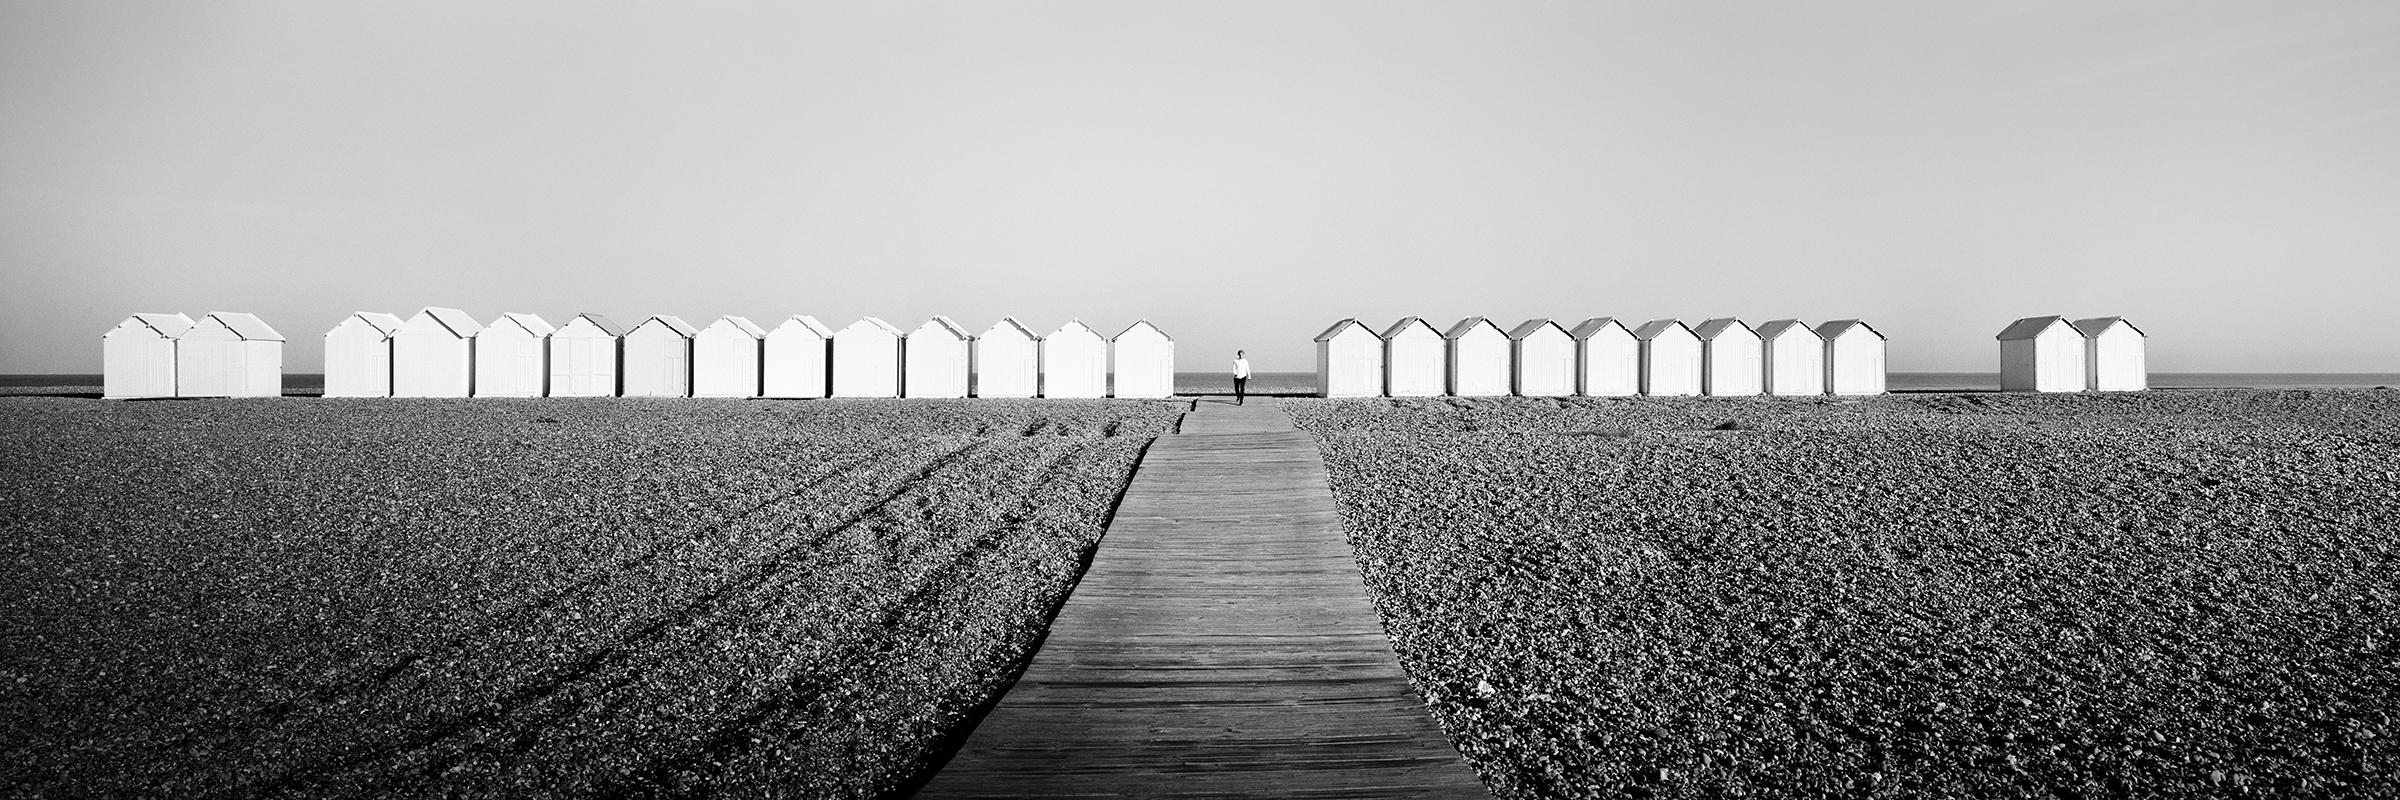 Gerald Berghammer Black and White Photograph - Beach Huts Panorama, France, black and white photography, landscape, fine art